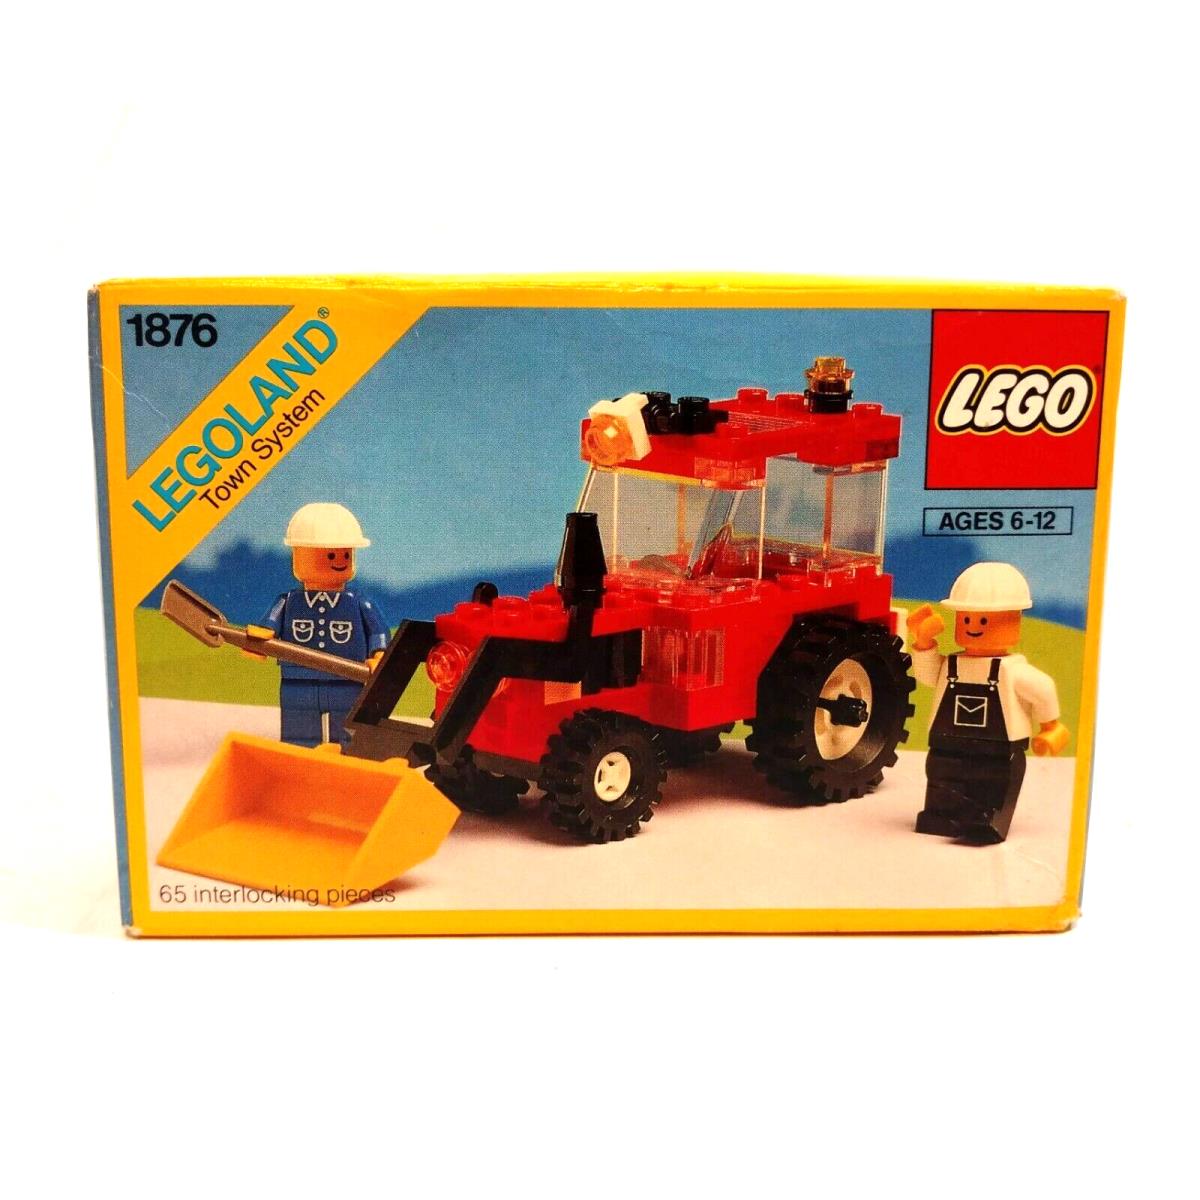 1990 Lego Legoland Town Soil Scooper 1876